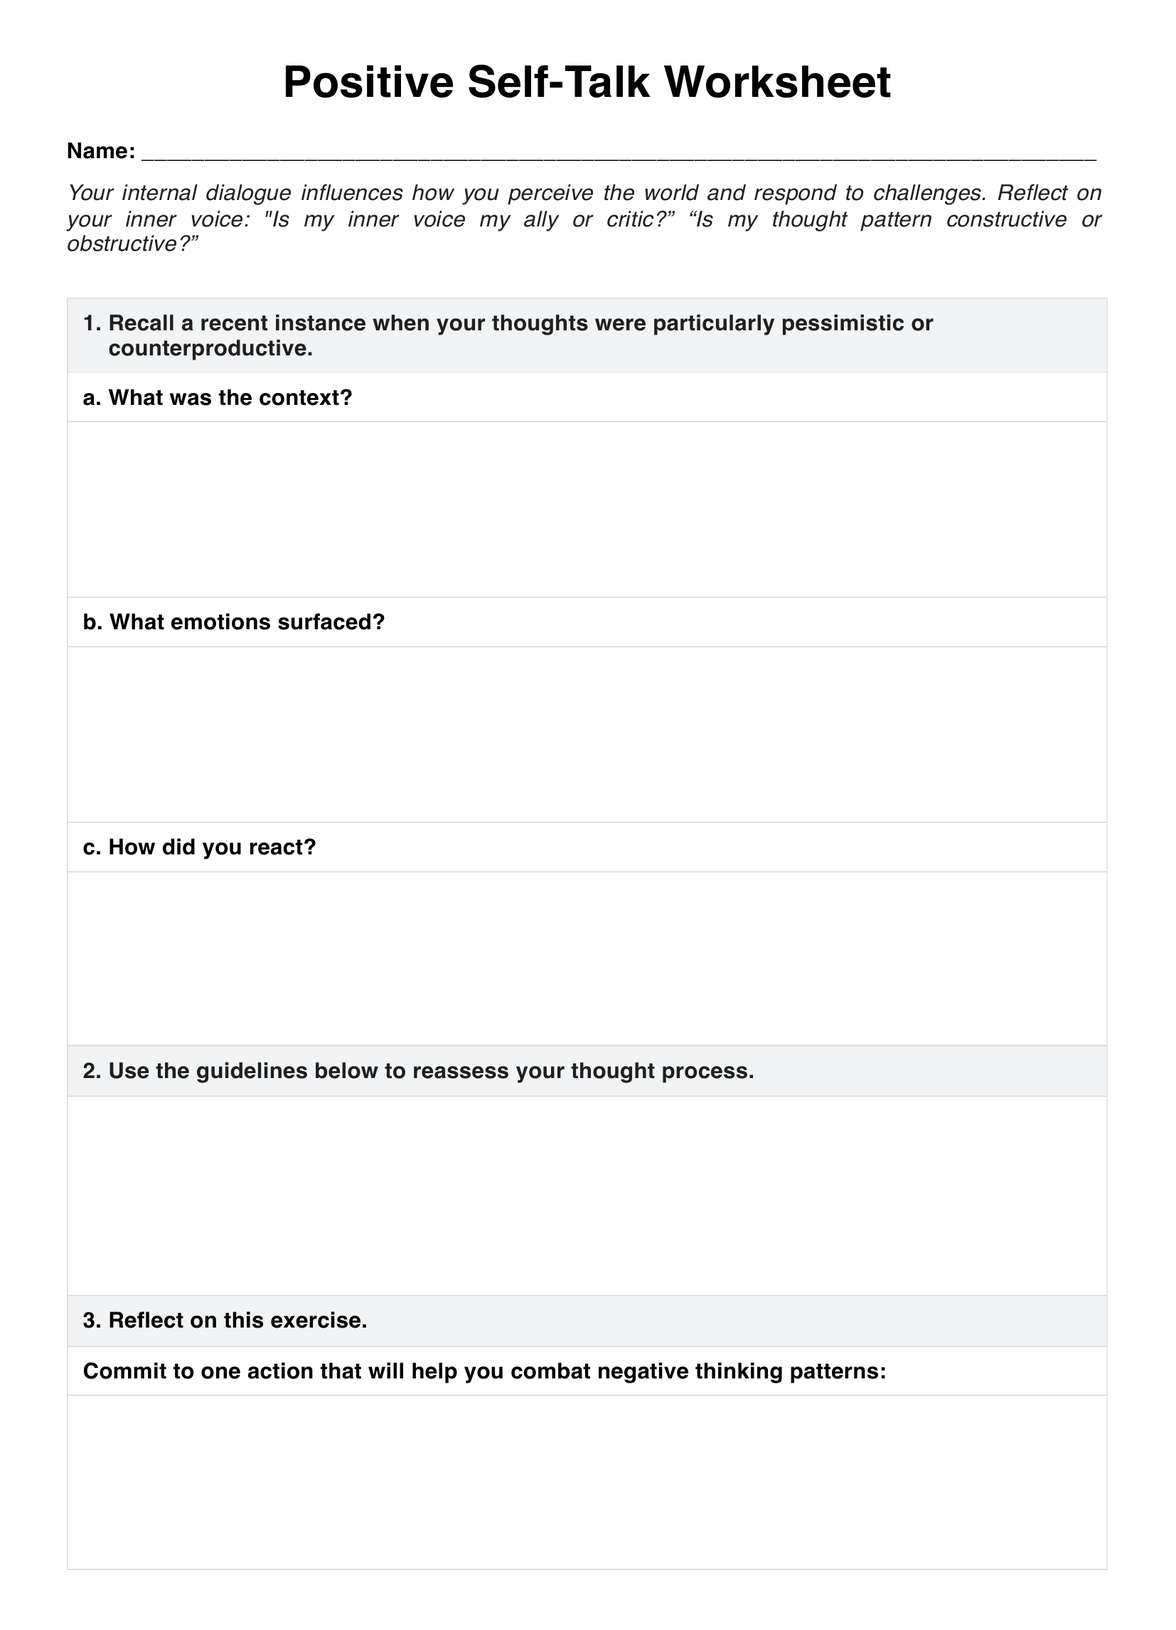 Positive Self-Talk Worksheet PDF Example